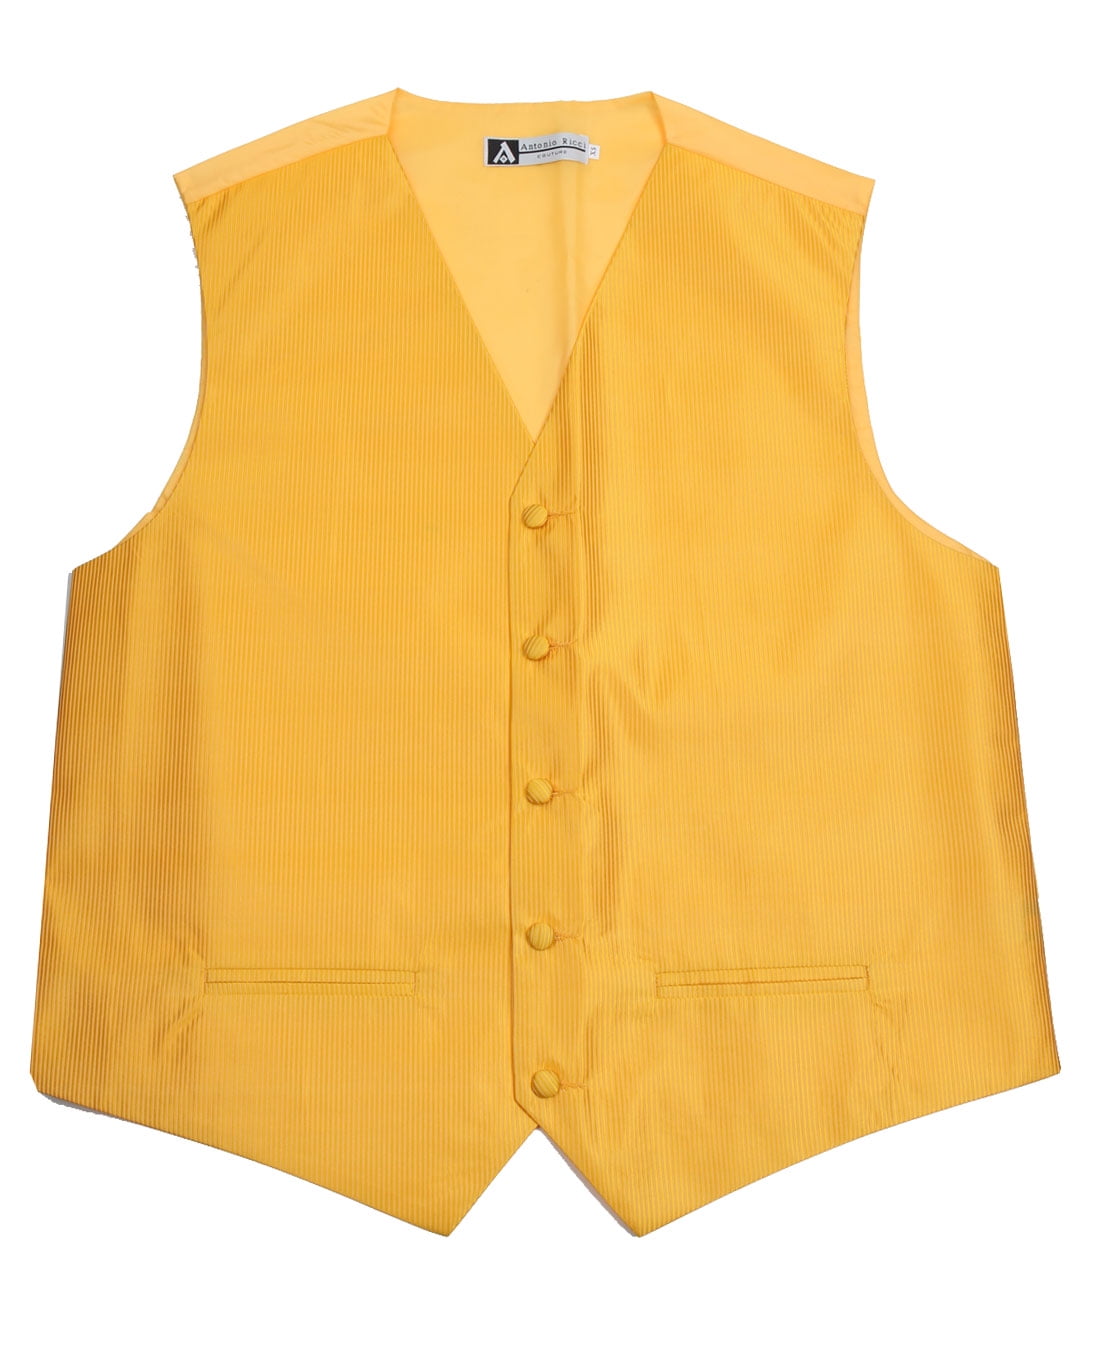 Men's Solid Formal Vest Gold for Tuxedo and Suit - Walmart.com